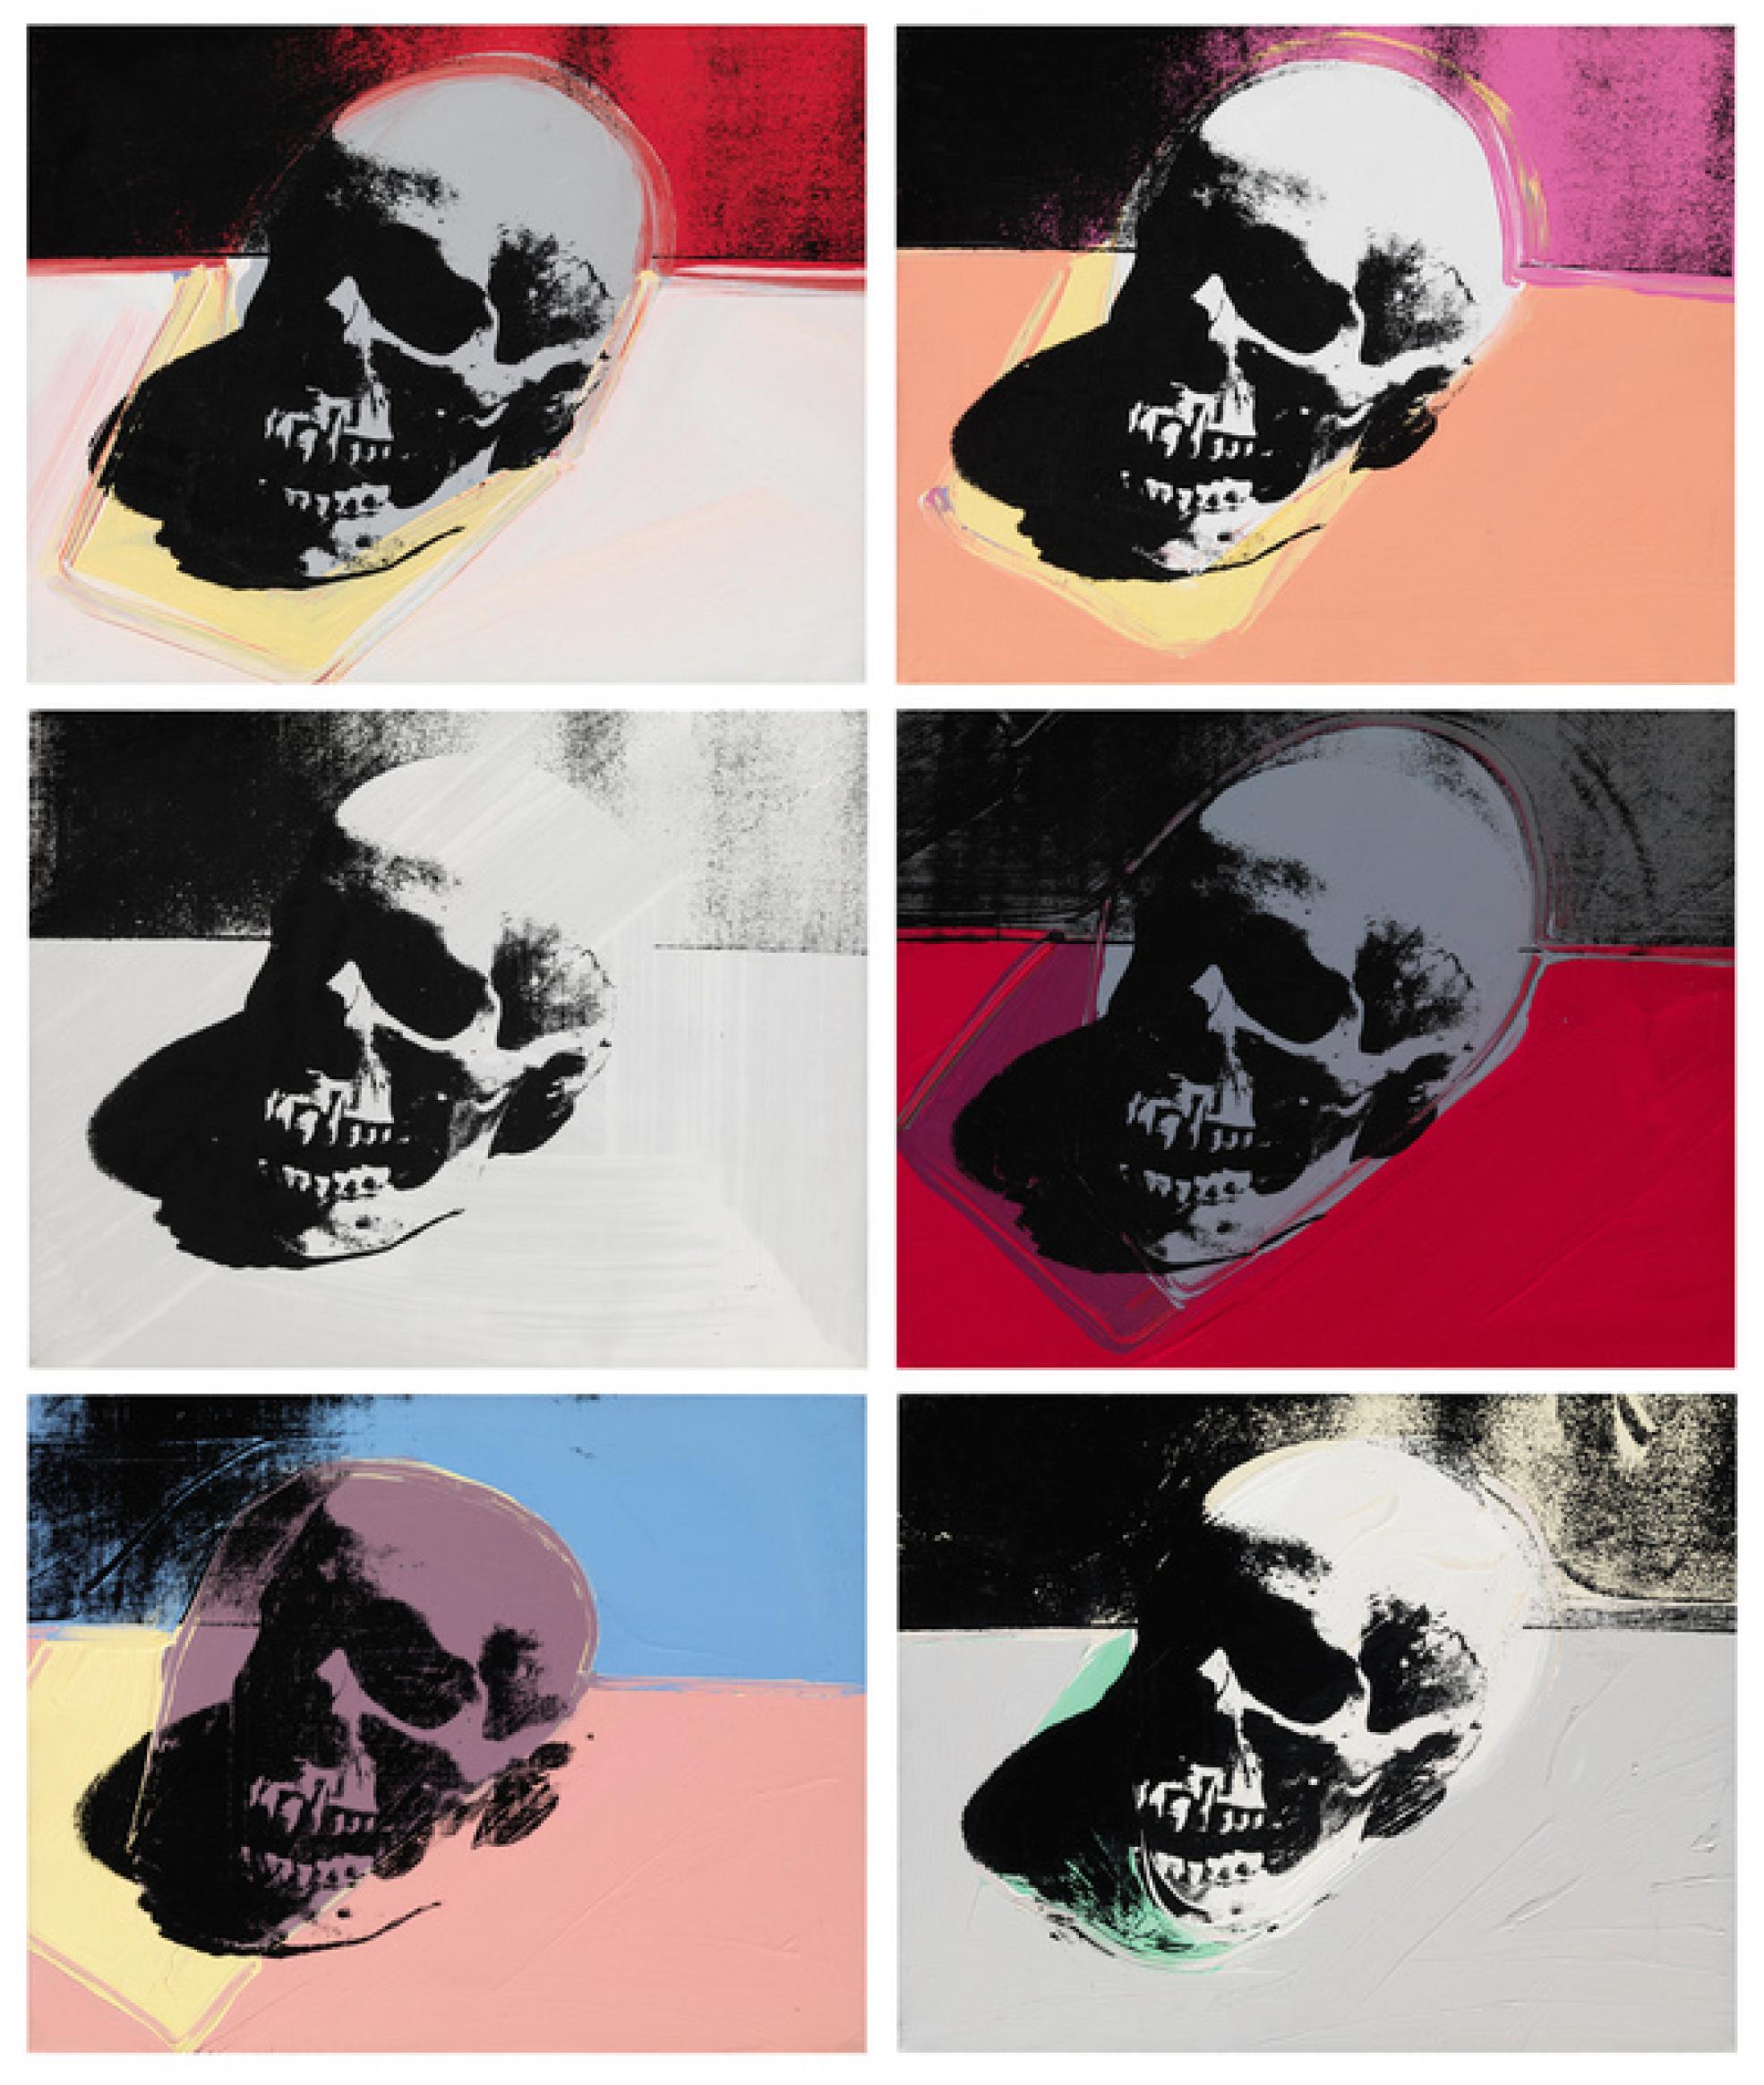 Skulls by Andy Warhol | Obelisk Art History